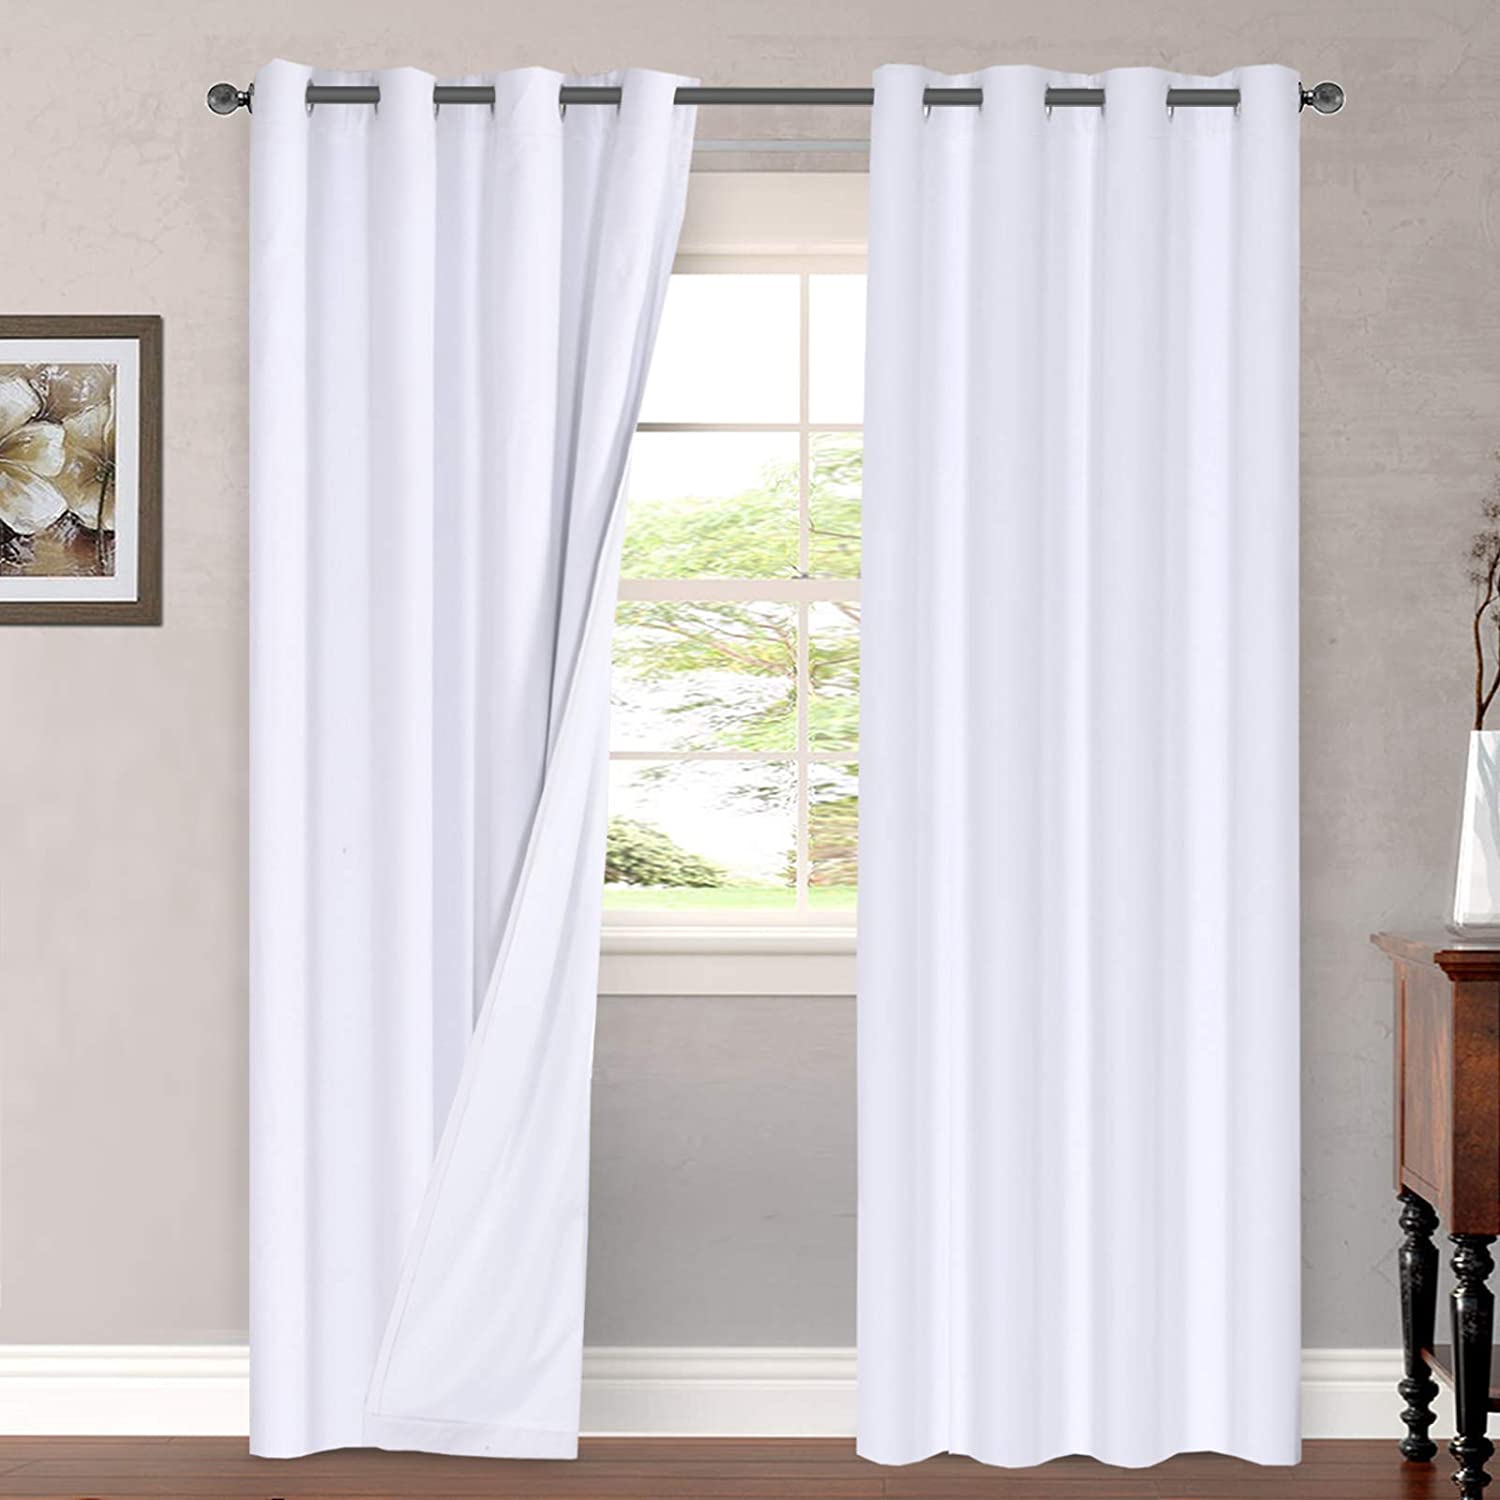 H.VERSAILTEX Linen-Look White Blackout Curtains